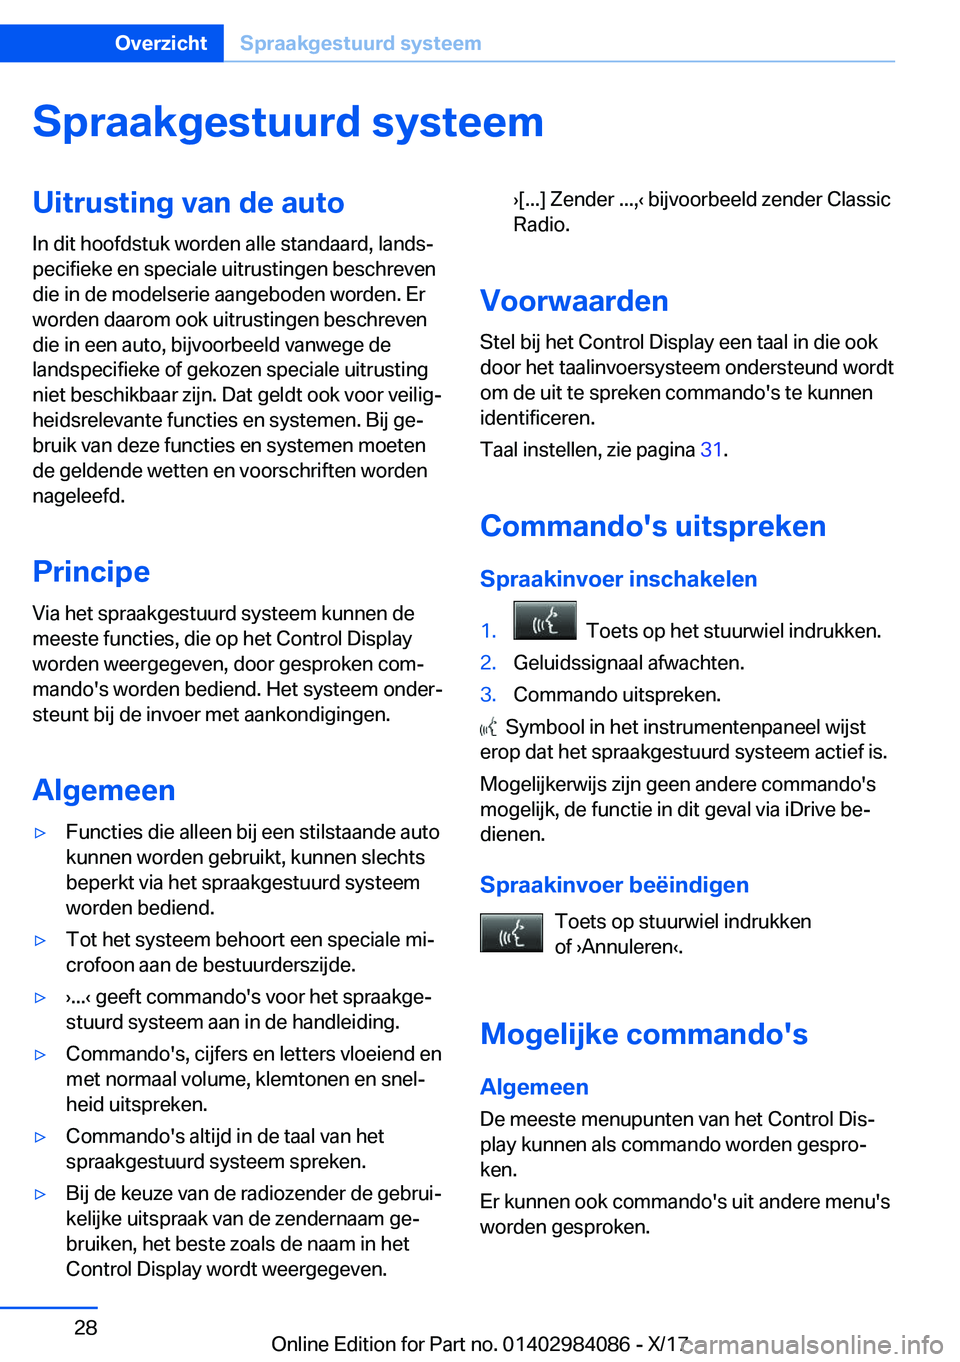 BMW 3 SERIES 2018  Instructieboekjes (in Dutch) �S�p�r�a�a�k�g�e�s�t�u�u�r�d��s�y�s�t�e�e�m�U�i�t�r�u�s�t�i�n�g��v�a�n��d�e��a�u�t�o�I�n� �d�i�t� �h�o�o�f�d�s�t�u�k� �w�o�r�d�e�n� �a�l�l�e� �s�t�a�n�d�a�a�r�d�,� �l�a�n�d�sj
�p�e�c�i�f�i�e�k�e�